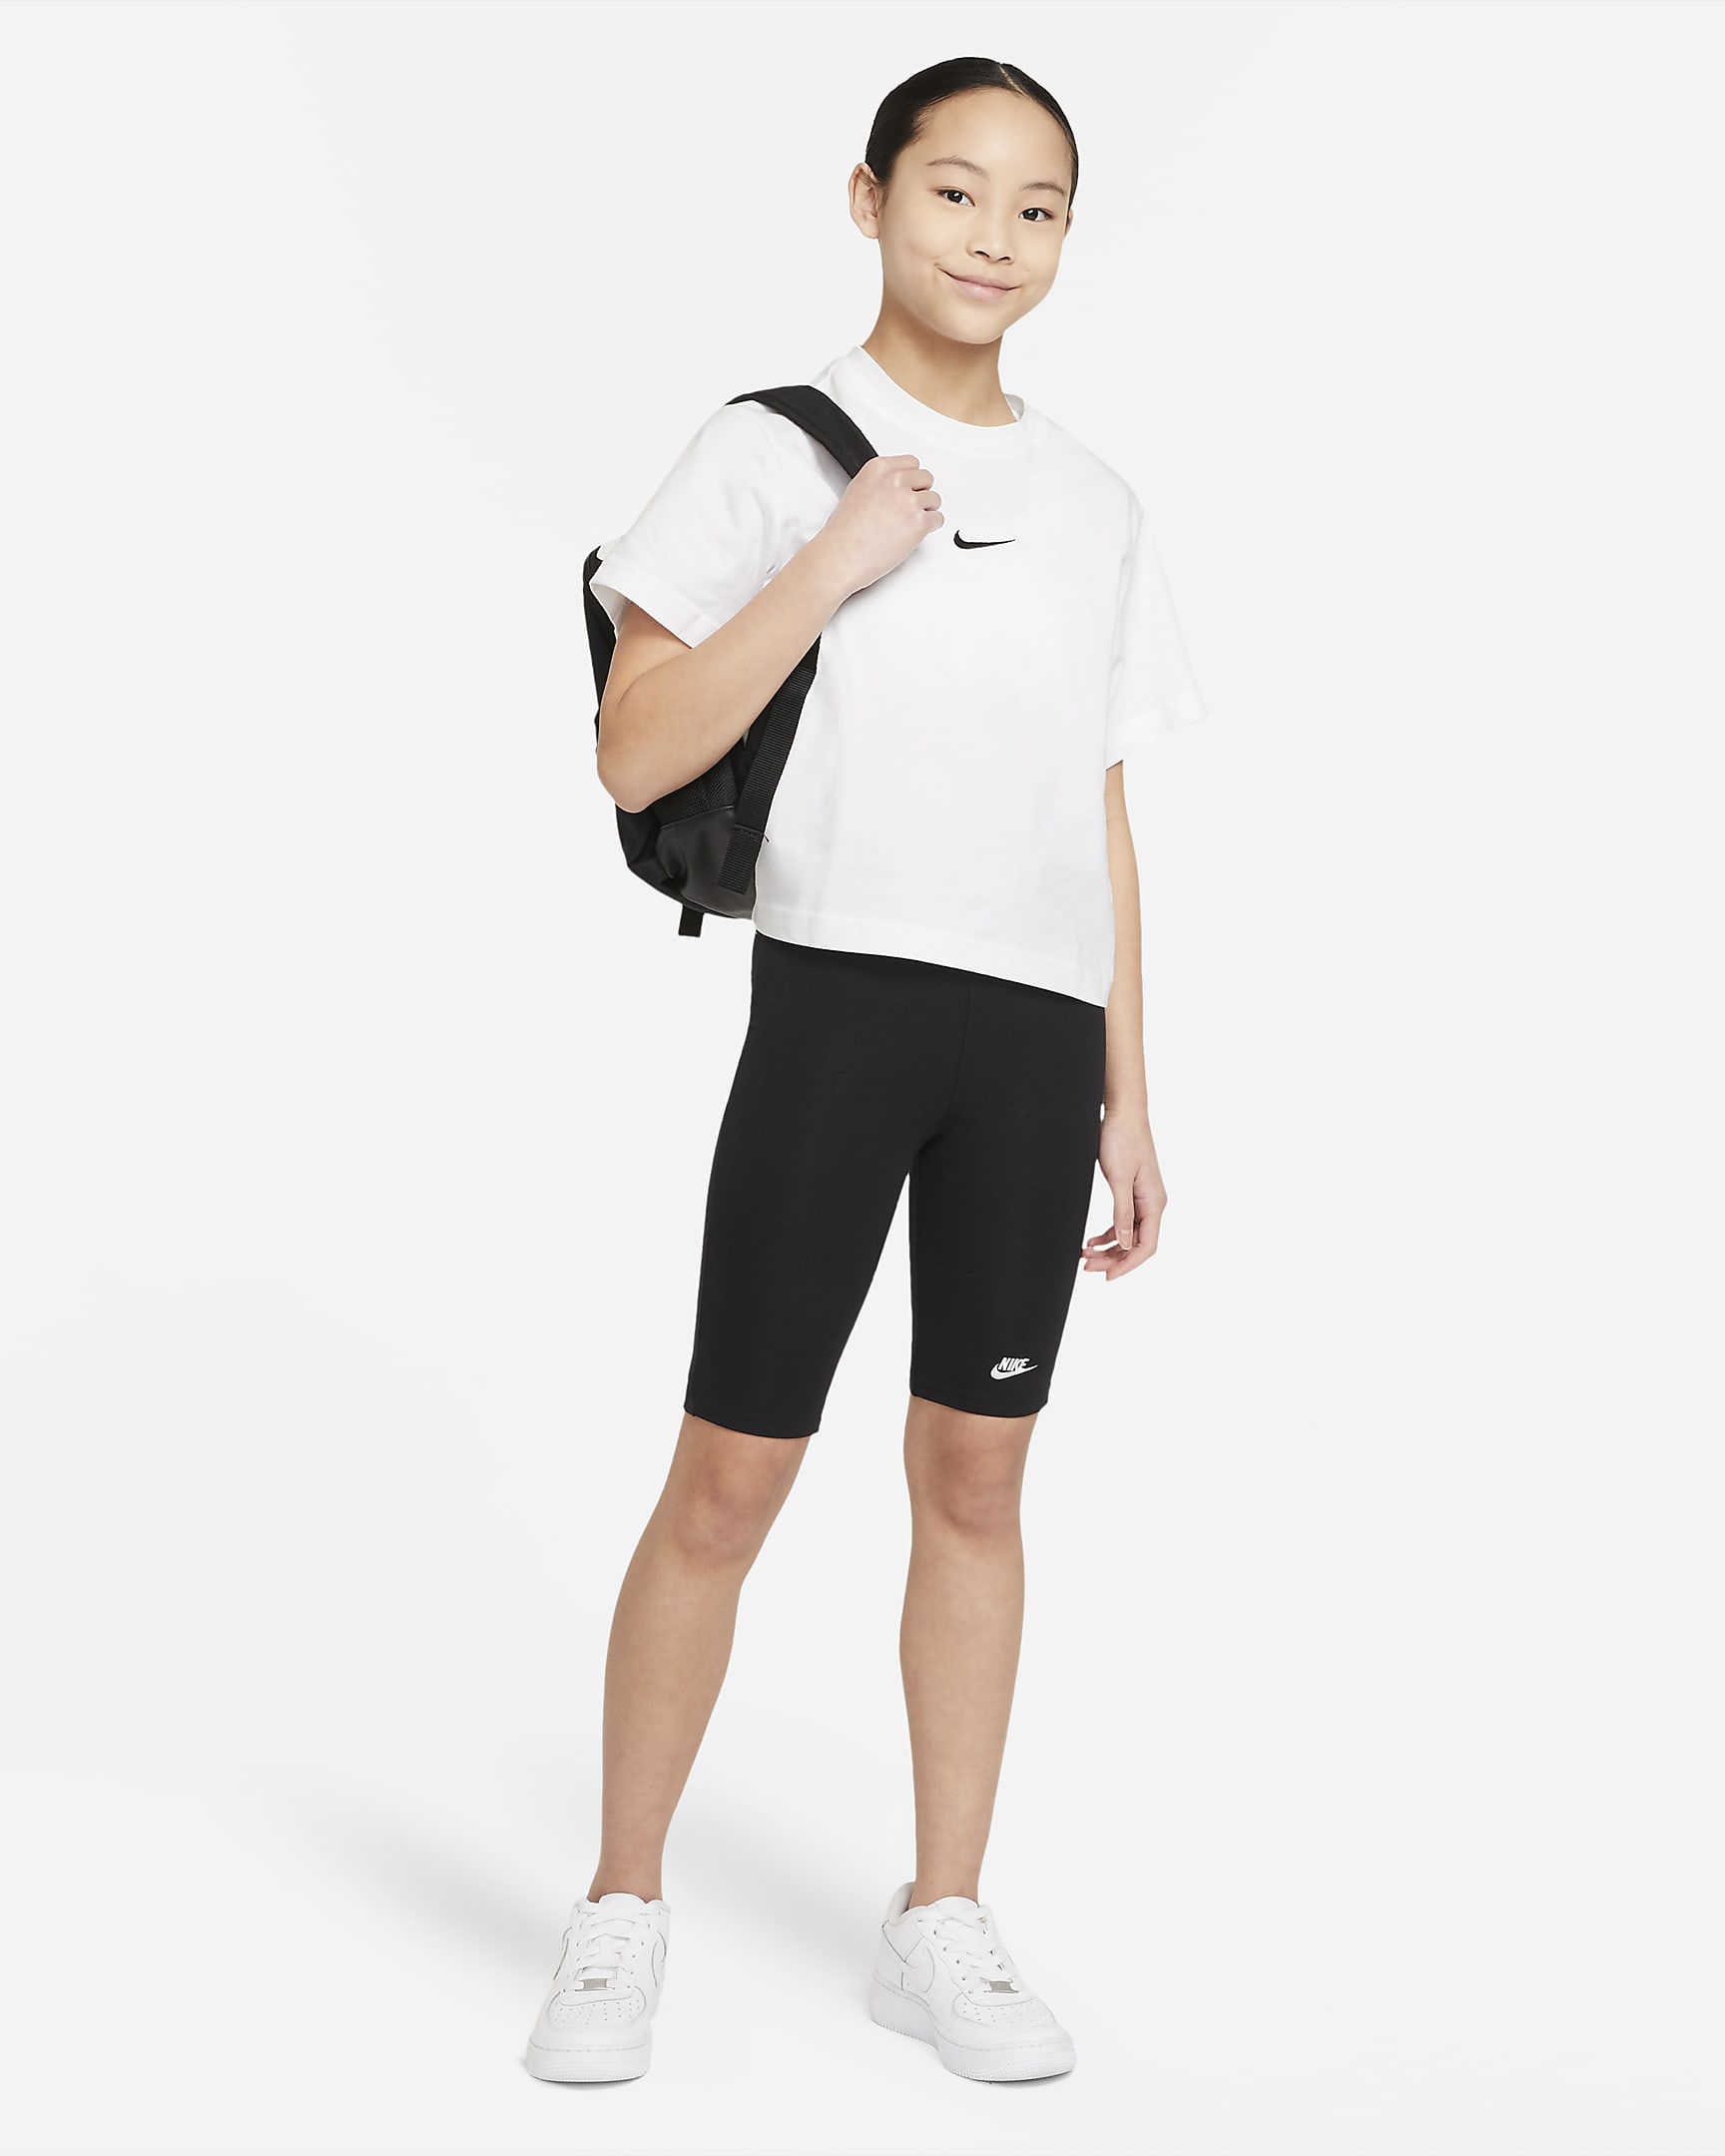 Nike Sportswear Older Kids' (Girls') T-Shirt - White/Black